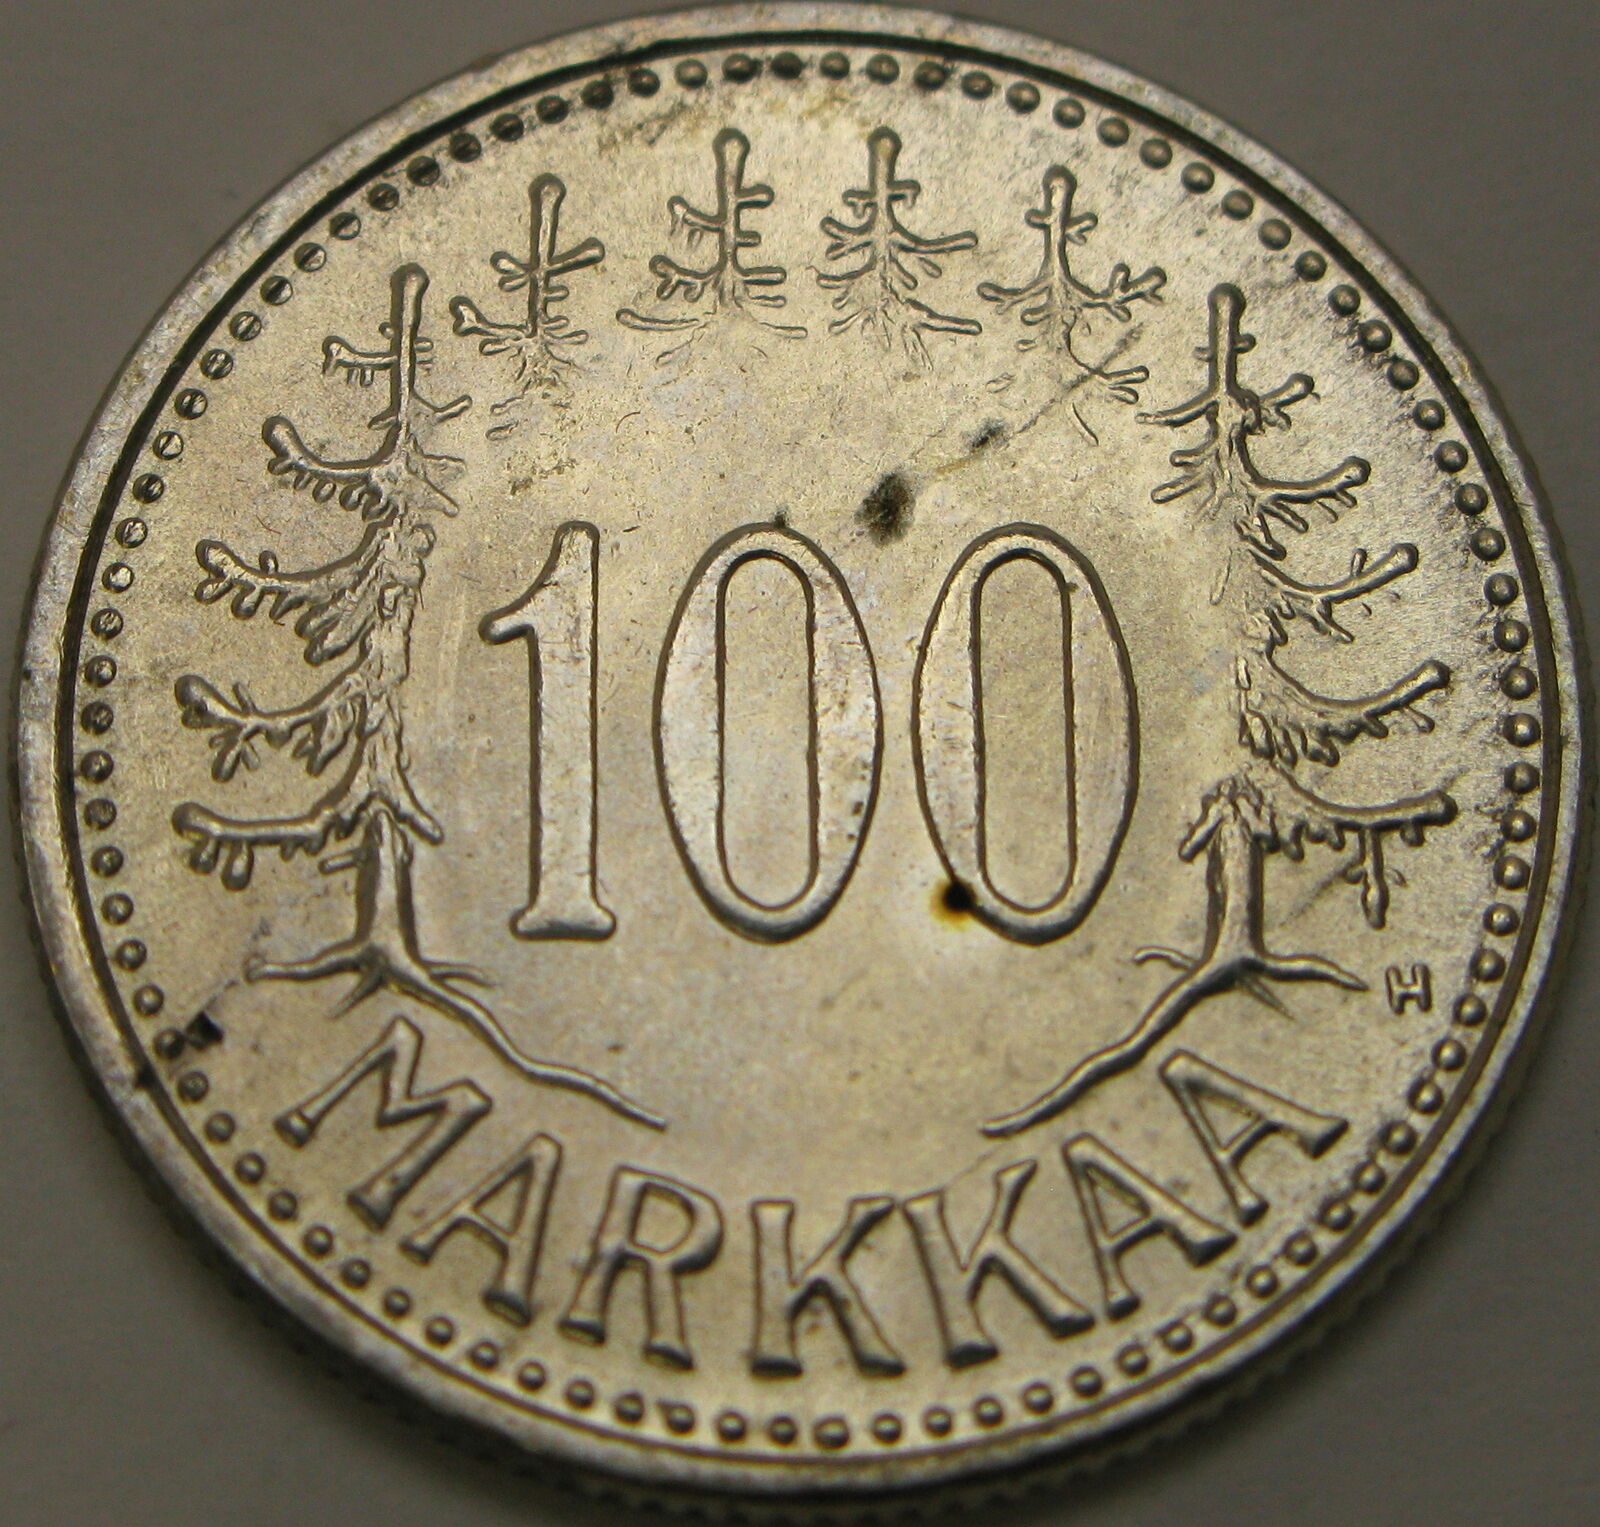 Finland 100 Markkaa 1956h - Silver .500 - Aunc - 1708 ¤